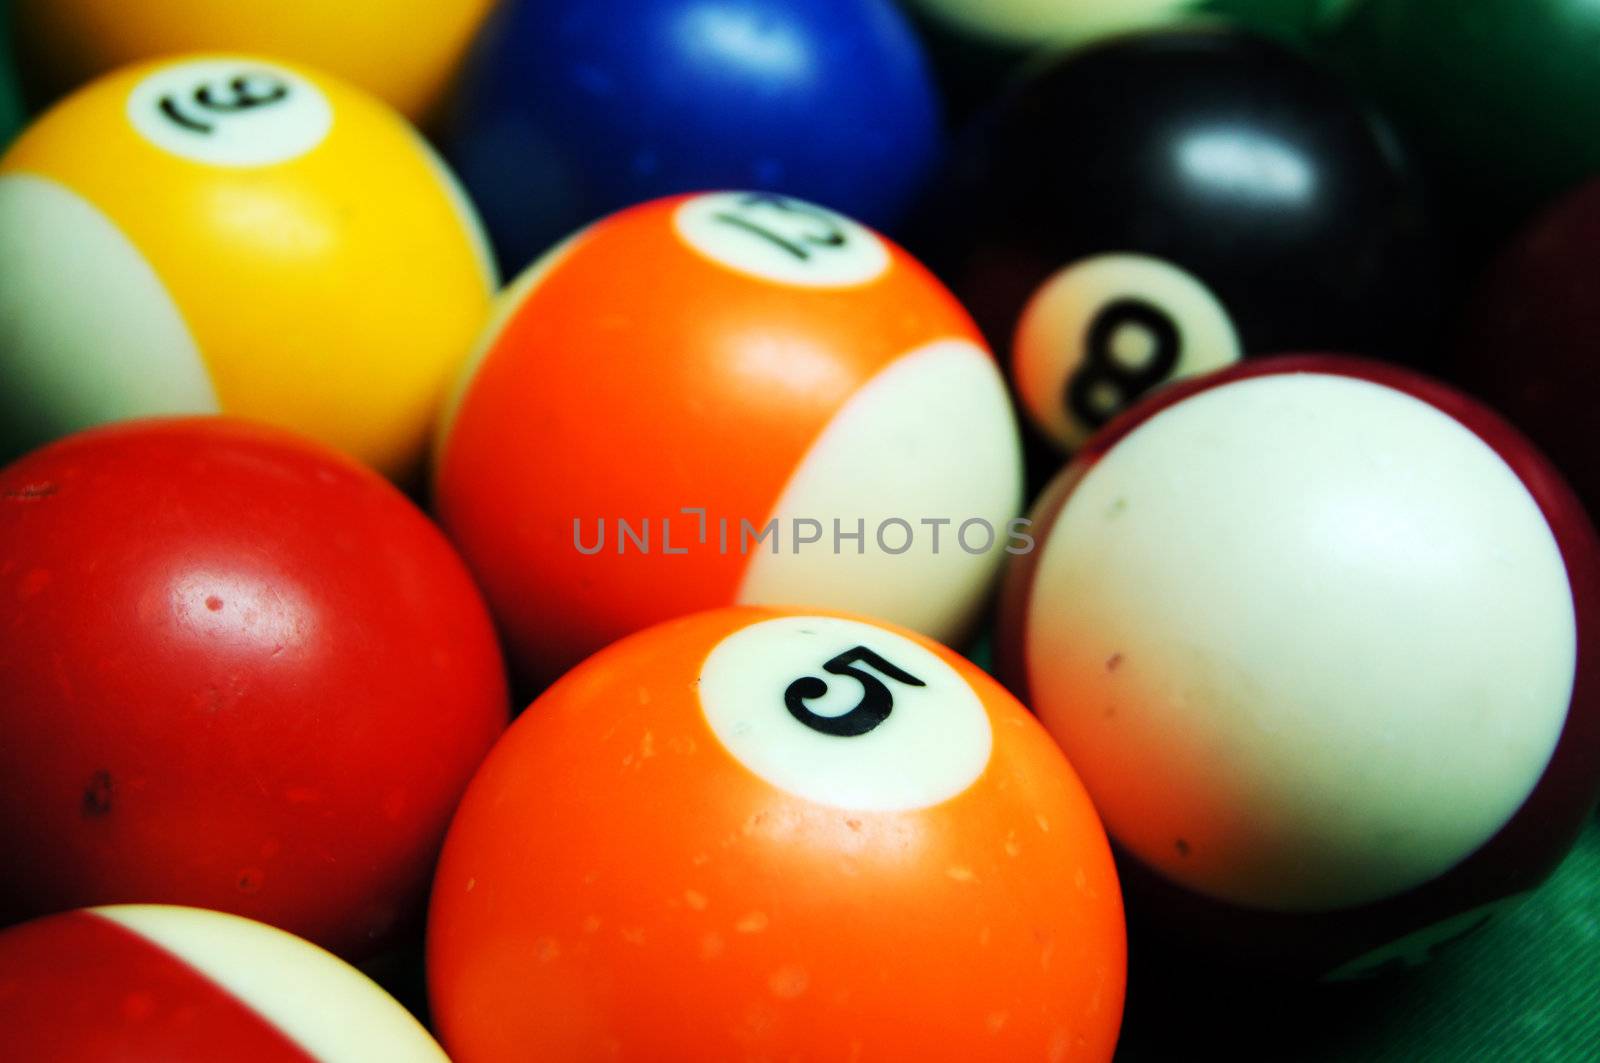 Billiard balls by Elet